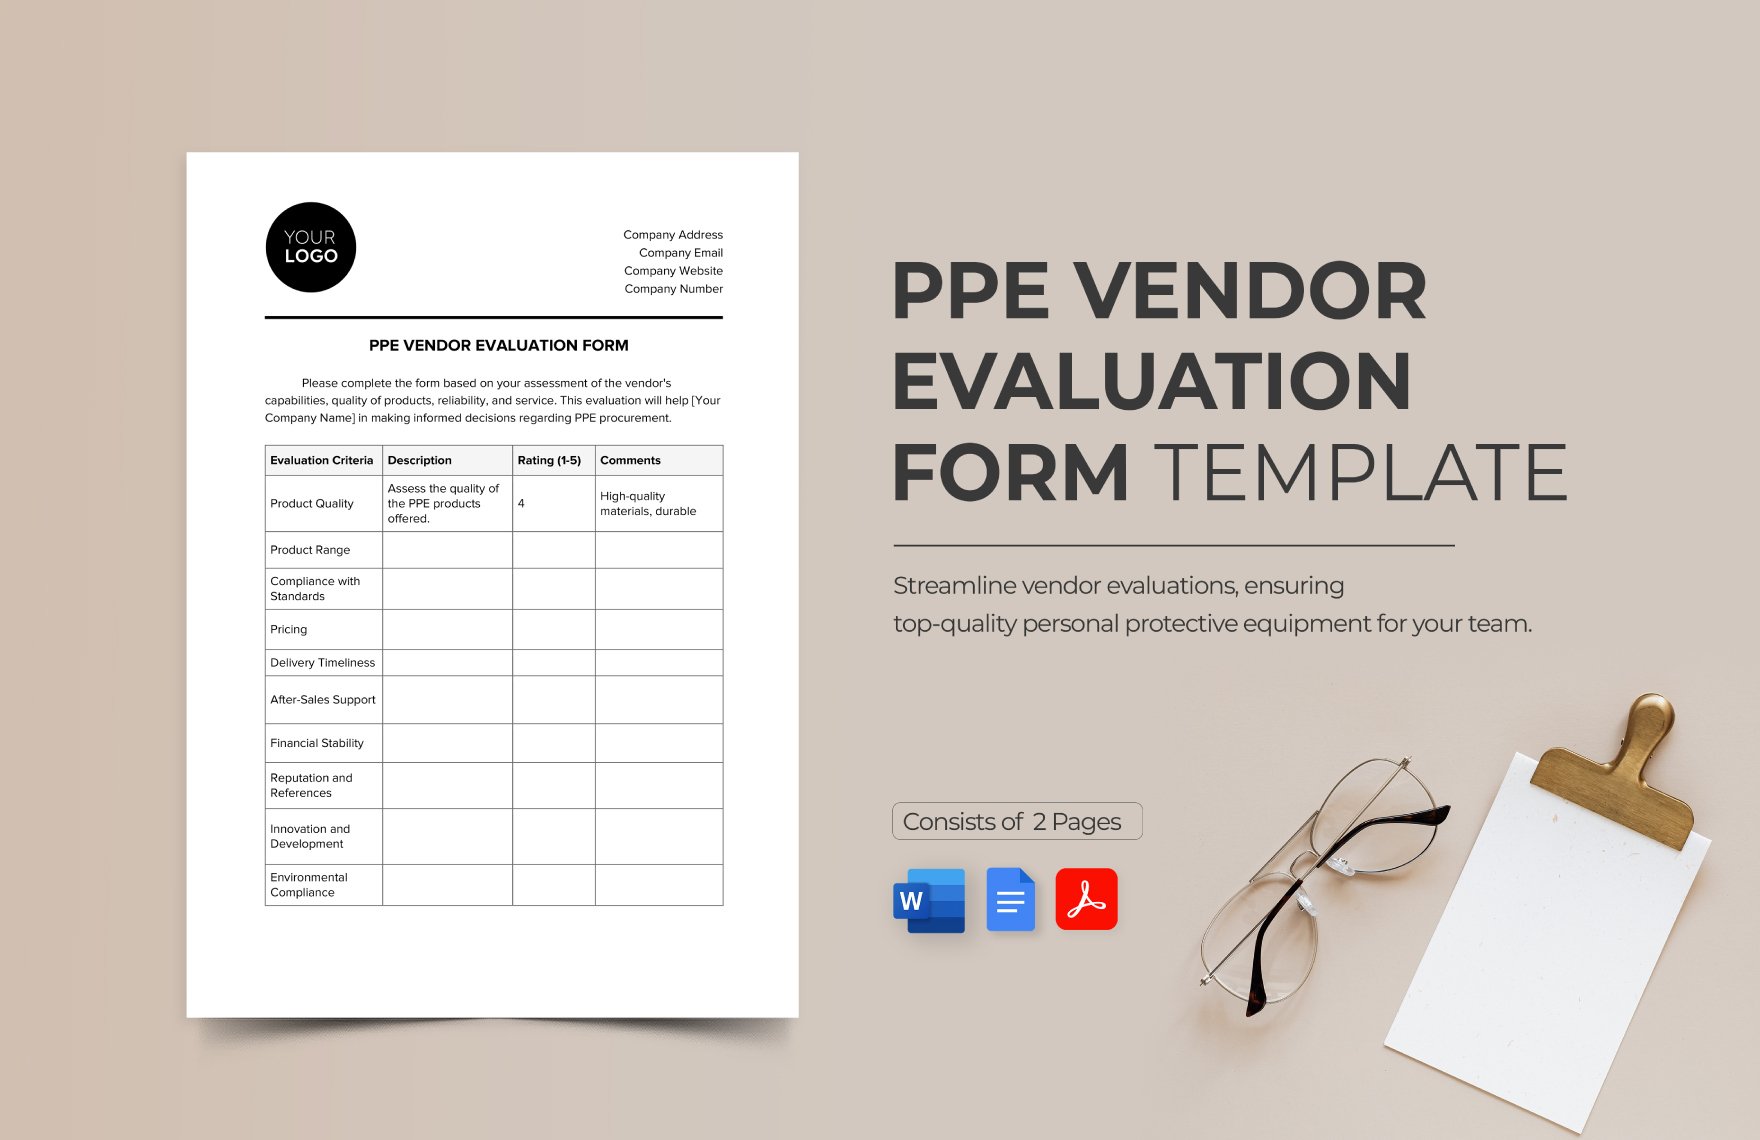 PPE Vendor Evaluation Form Template